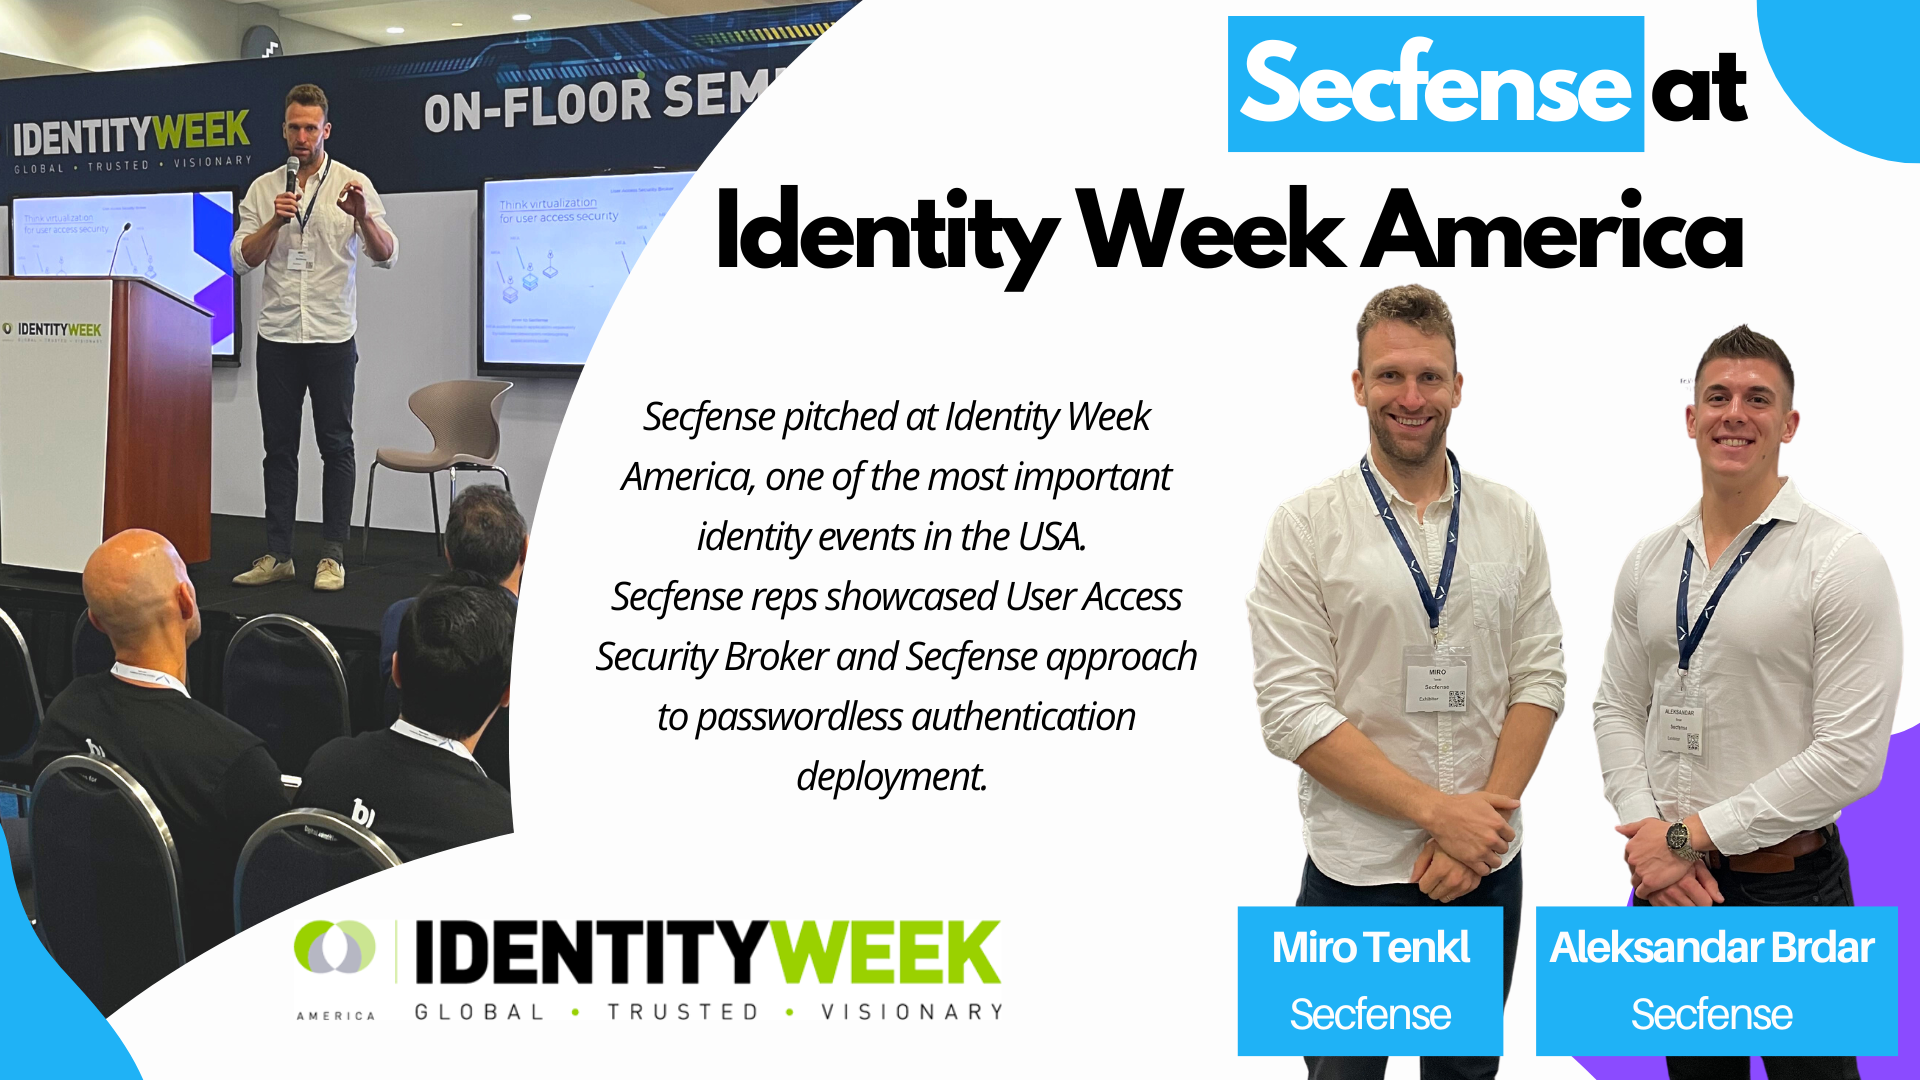 Secfense at Identity Week America